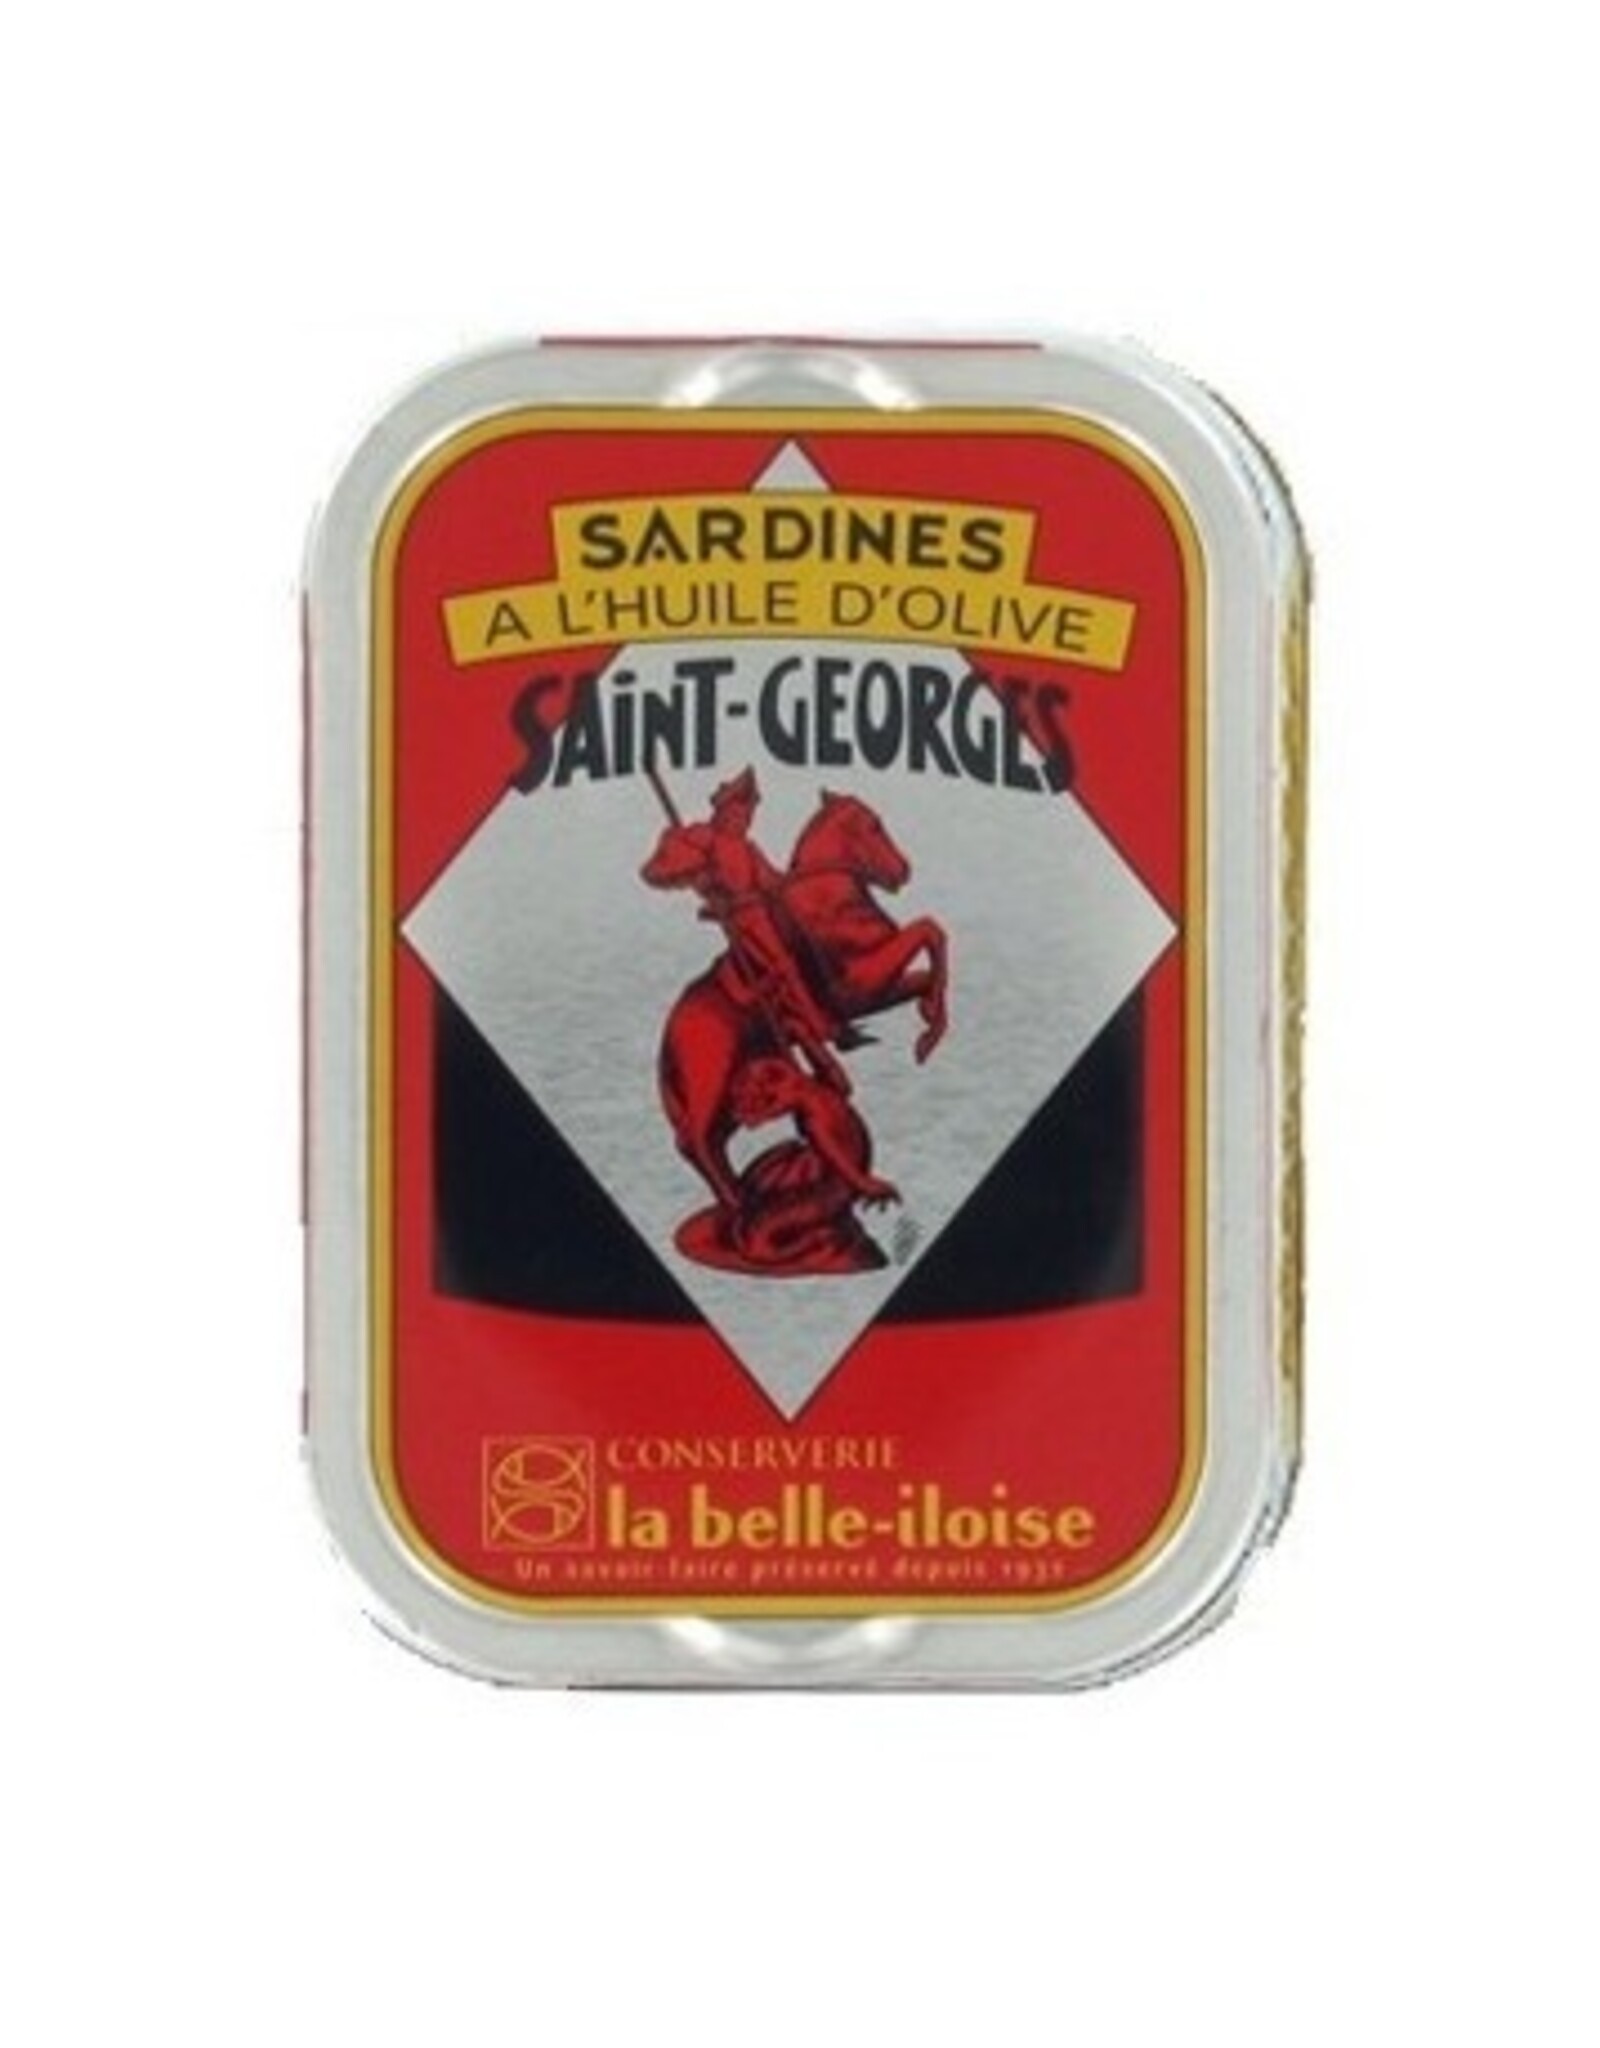 La Belle Iloise -Sardines a L'Huile 'Saint Georges' - Sardines in Olive Oil